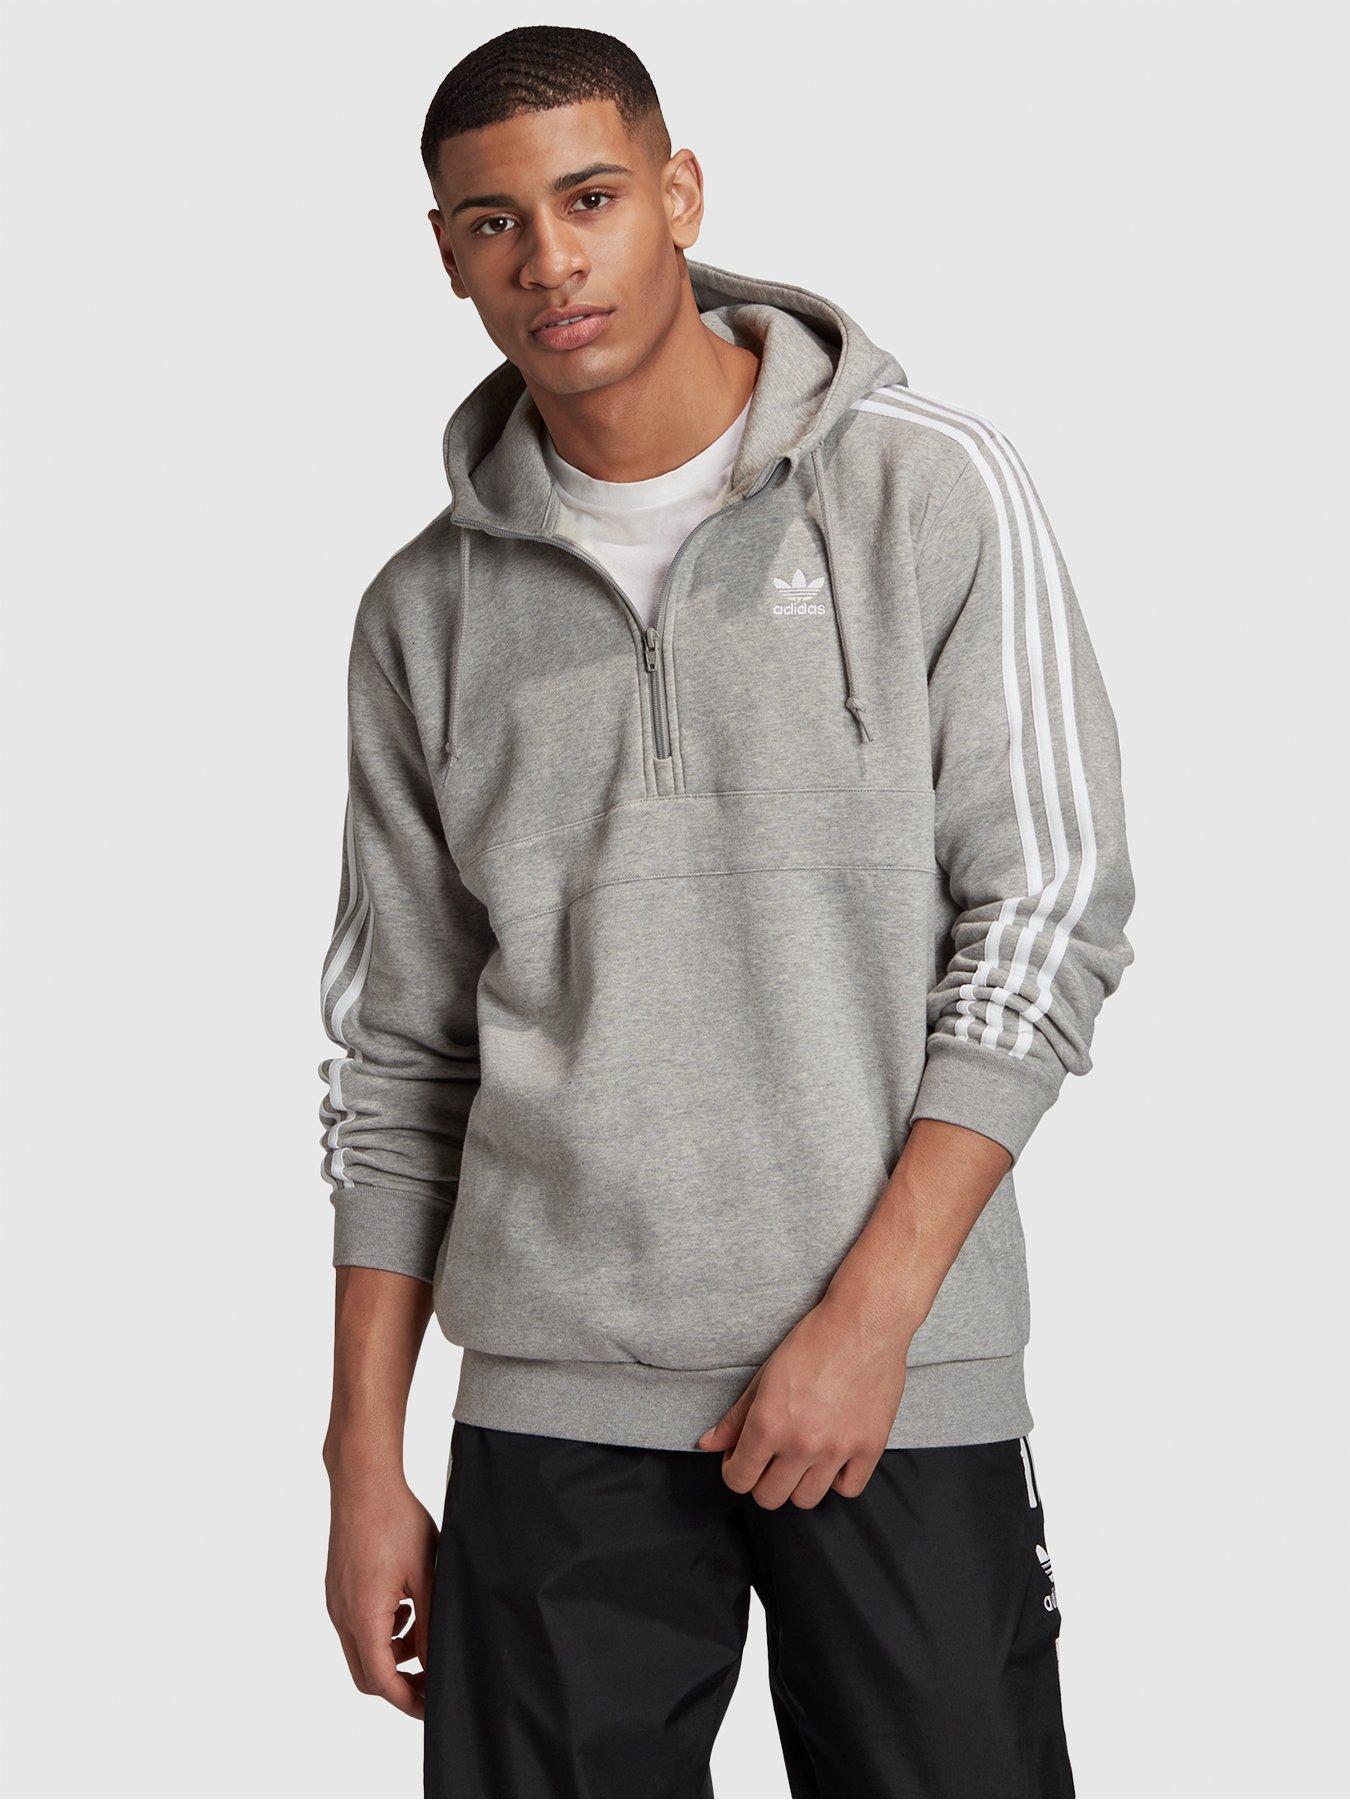 grey adidas hoodie 3 stripes